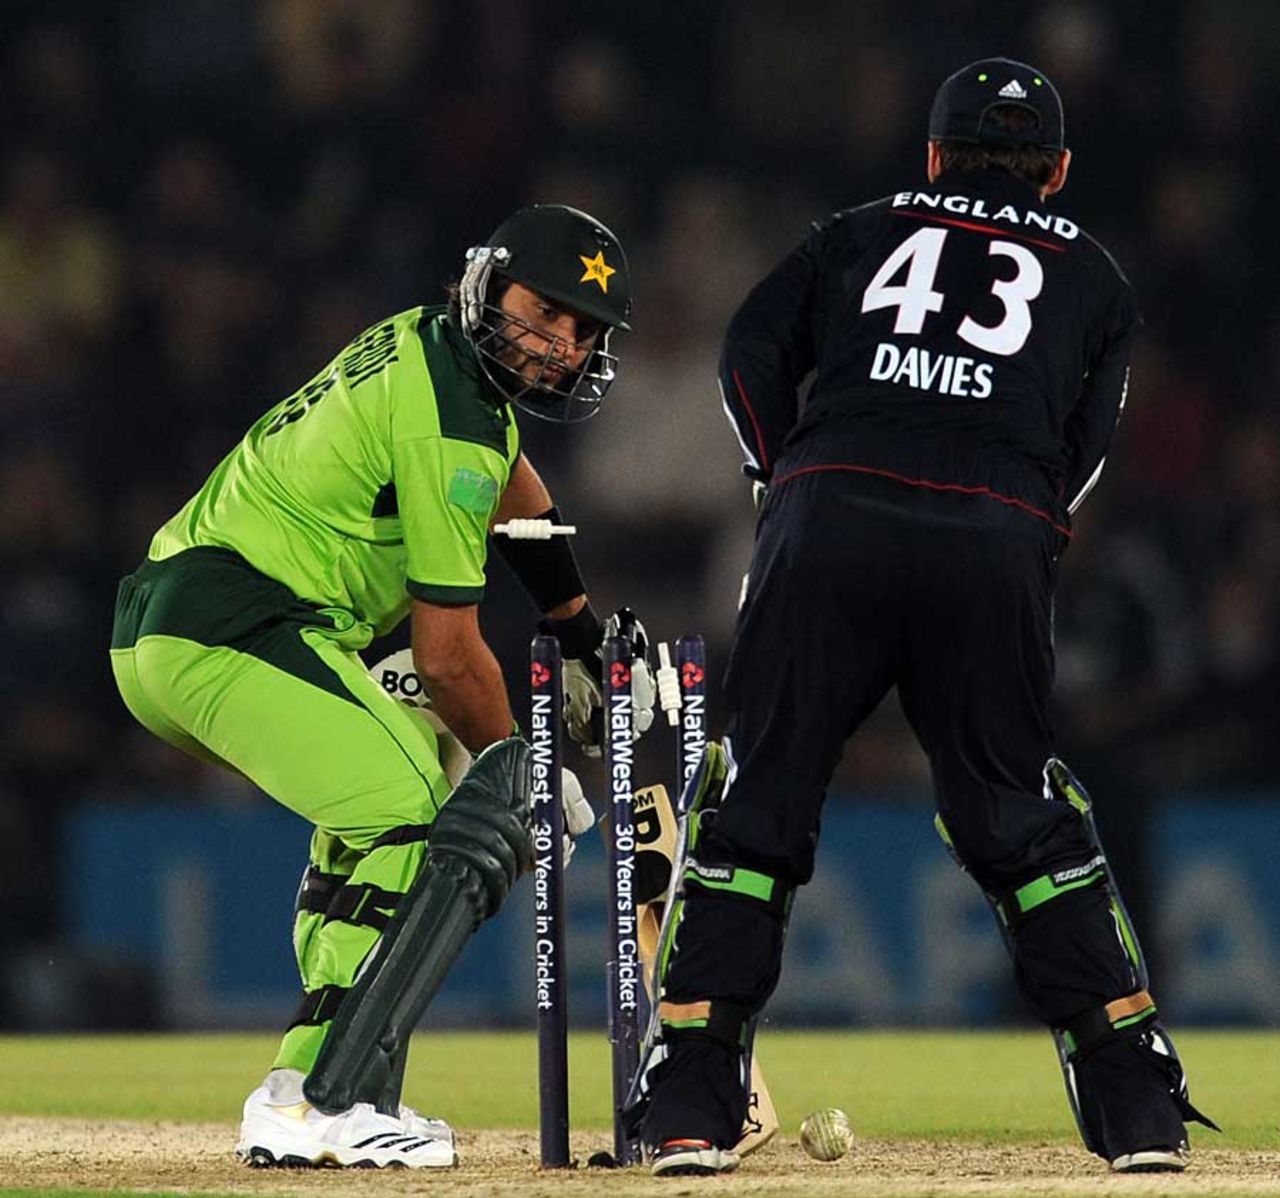 Shahid Afridi dragged on first ball against Graeme Swann, England v Pakistan, 5th ODI, Rose Bowl, September 22, 2010